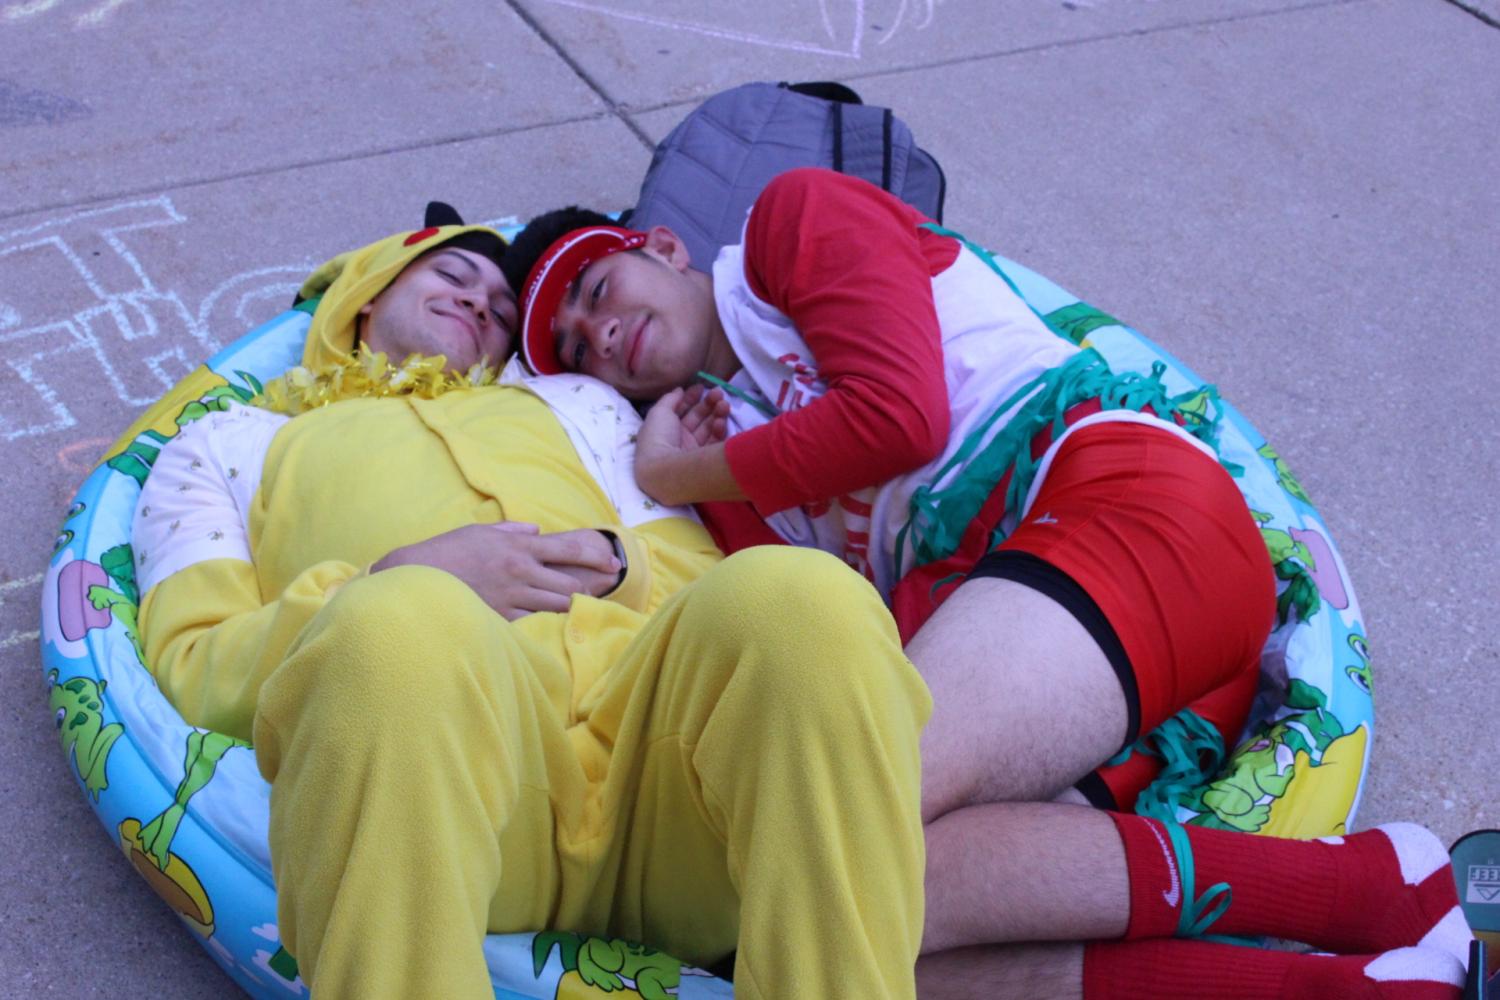 Seniors Matt Schlitter (left) and Alexian Nevarez (right) cuddle up before school while embracing the Hawaiian theme.